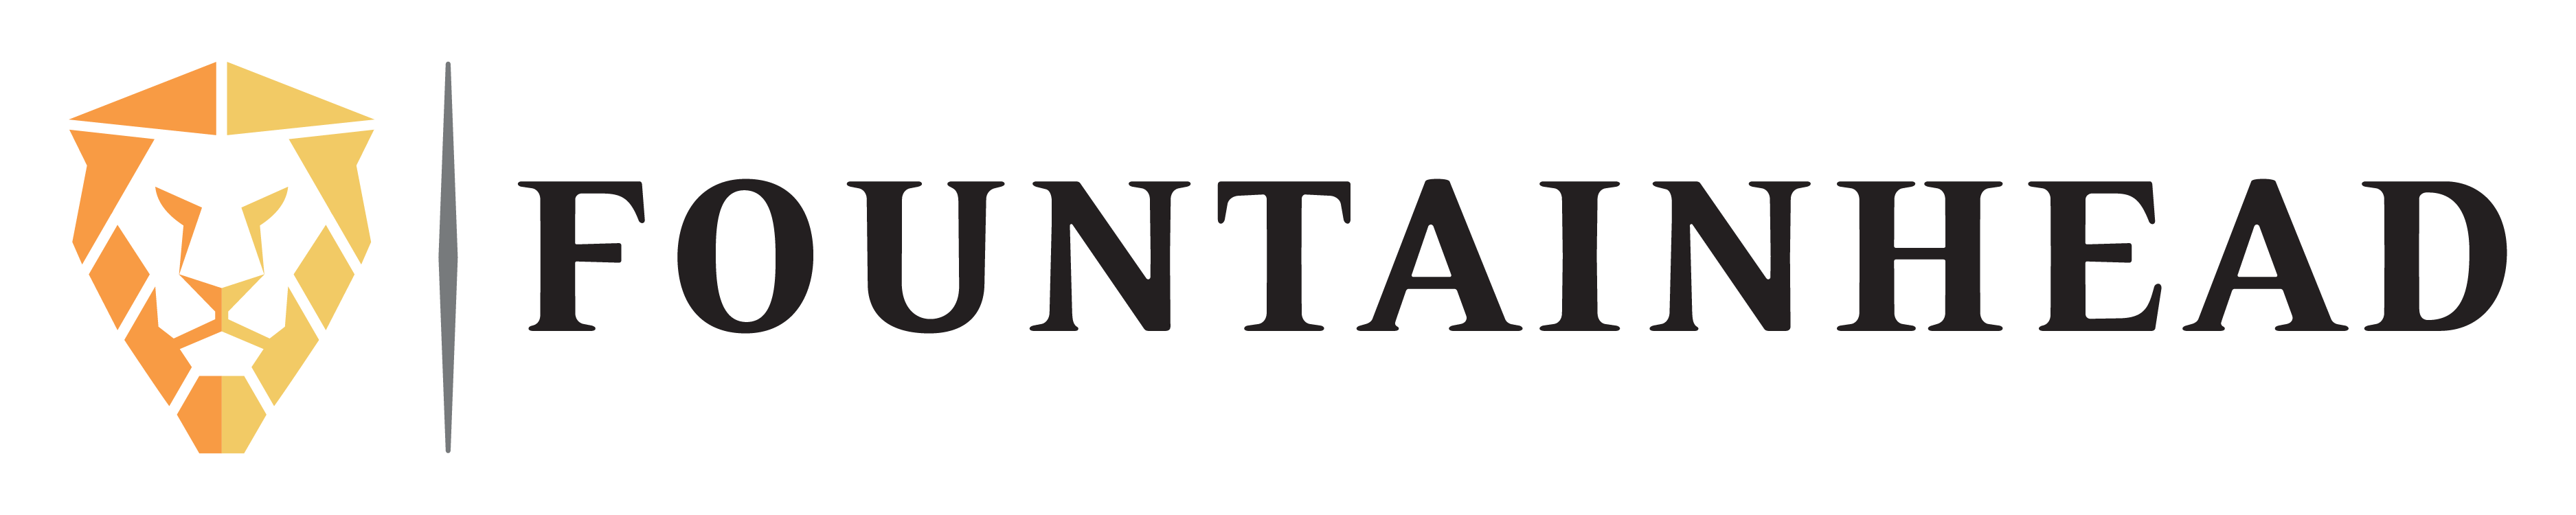 Fountainhead Logo.png